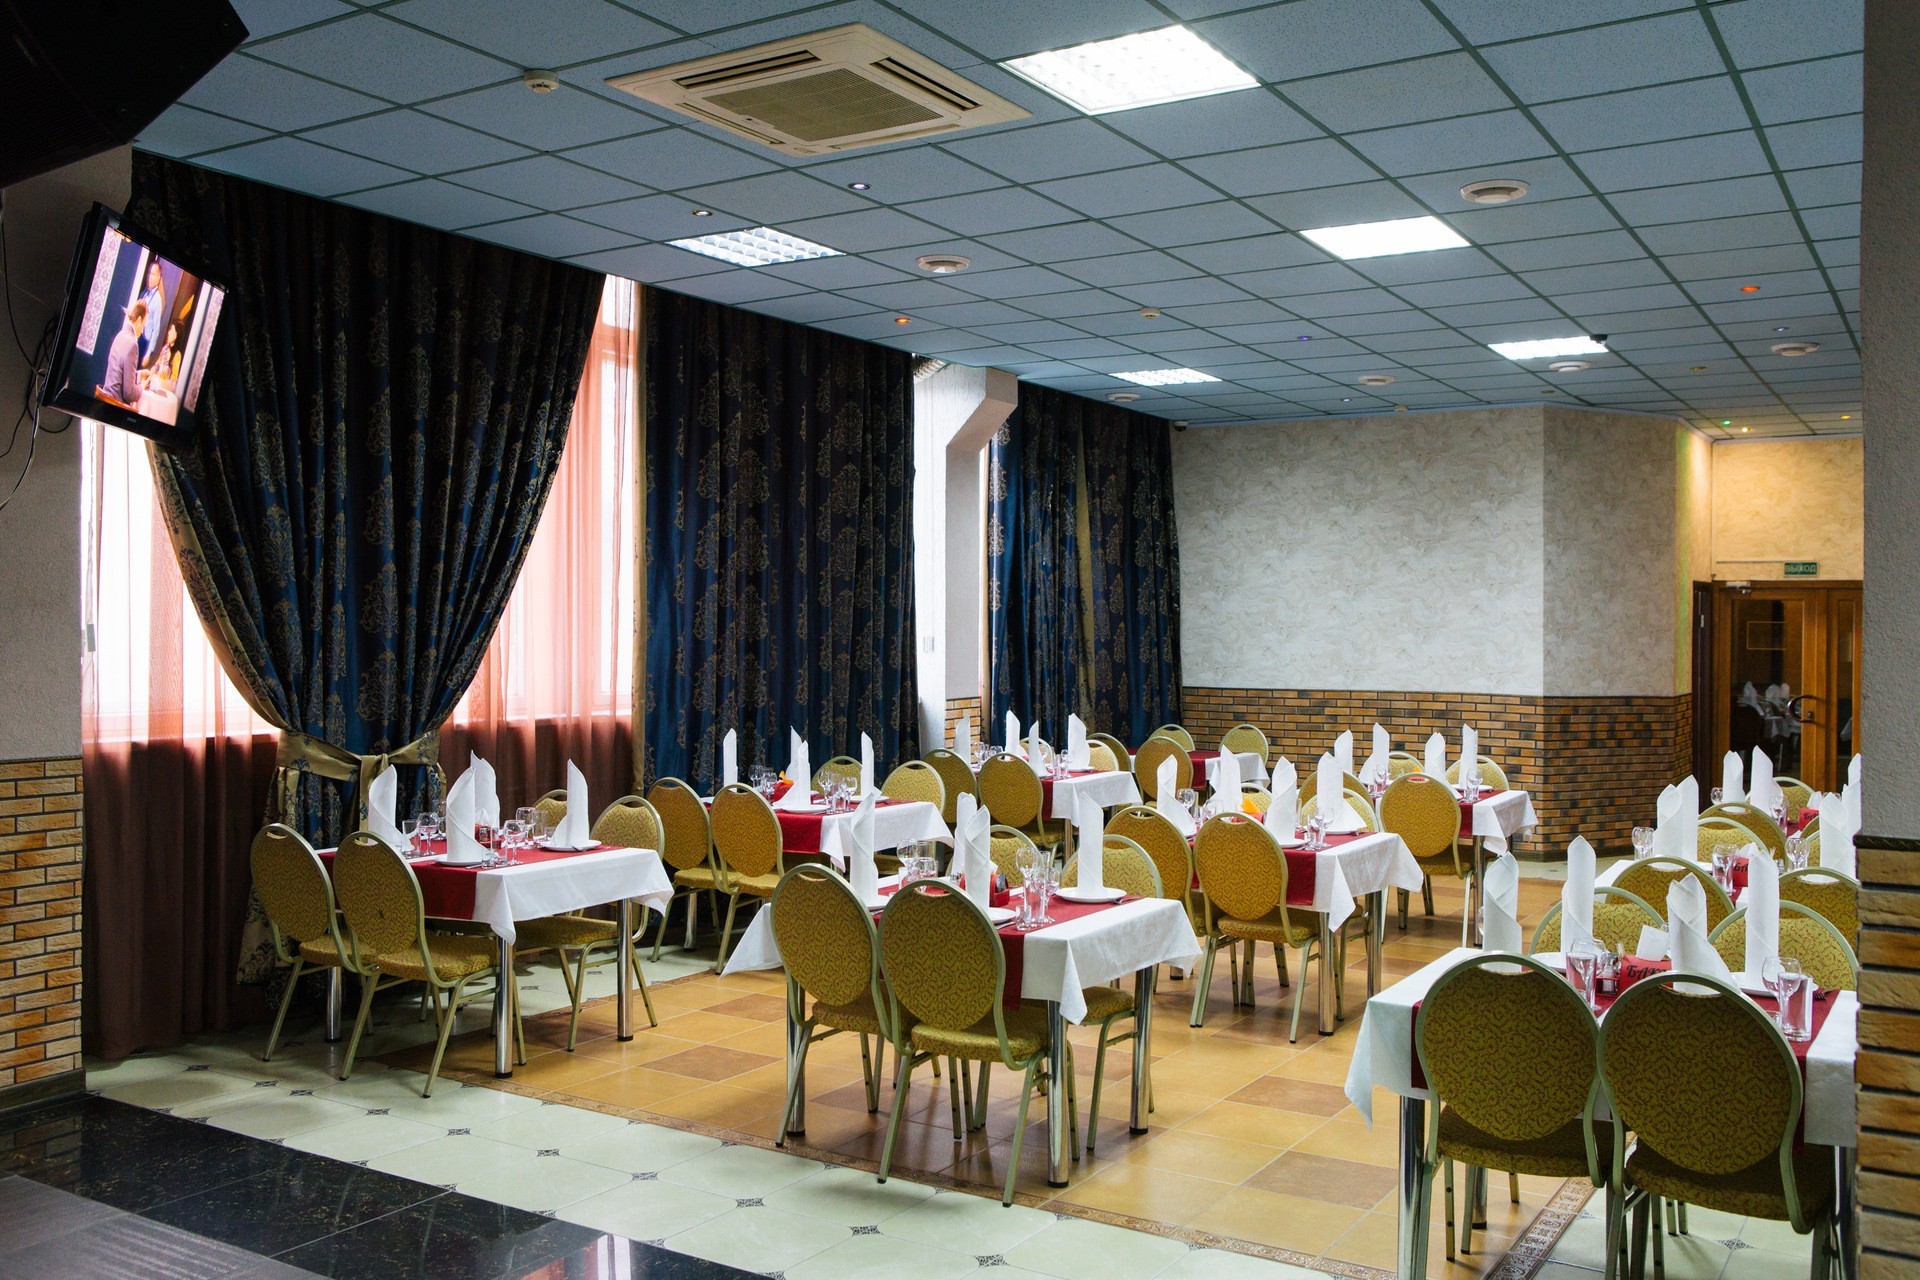  Кафе-клуб «Баку» в г. Минске, фото 7